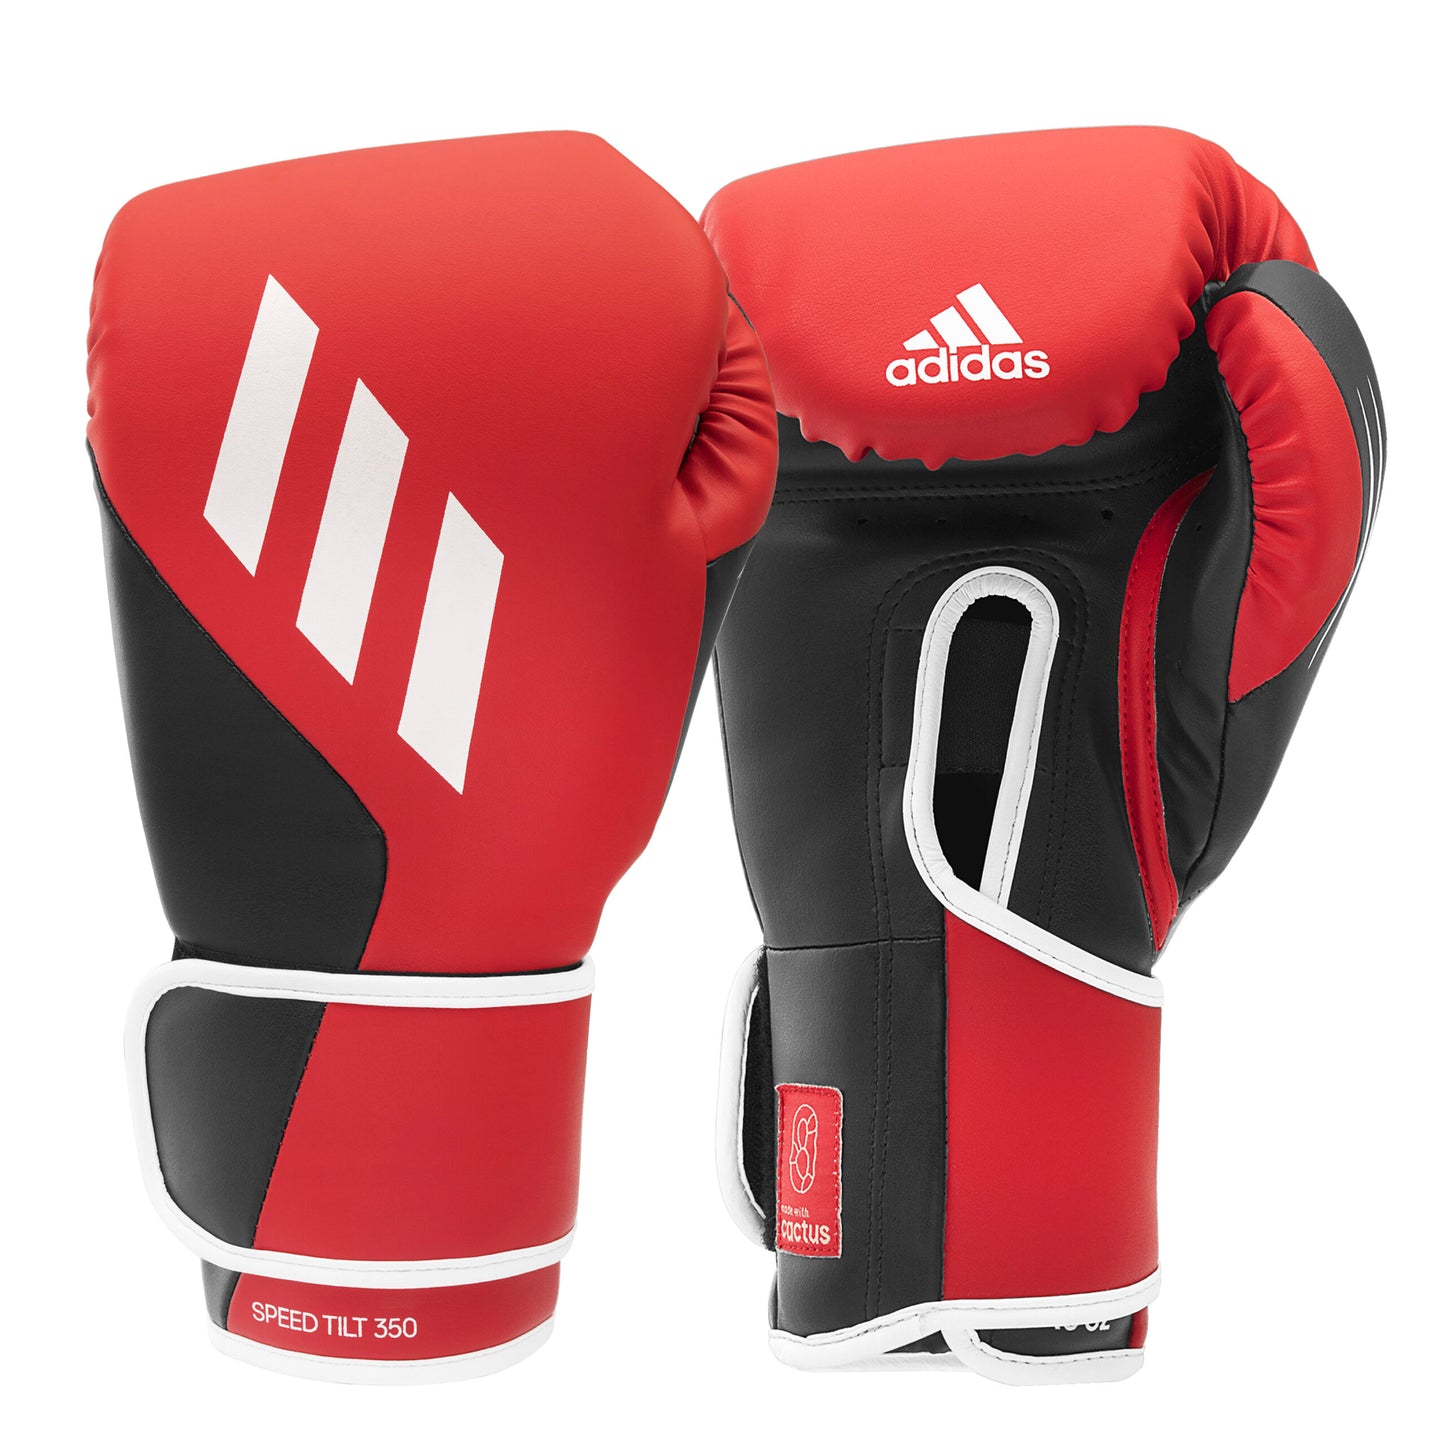 Adispd350tg Adidas Tilt 350 Pro Training Boxing Glove Strap Active Red Black 01